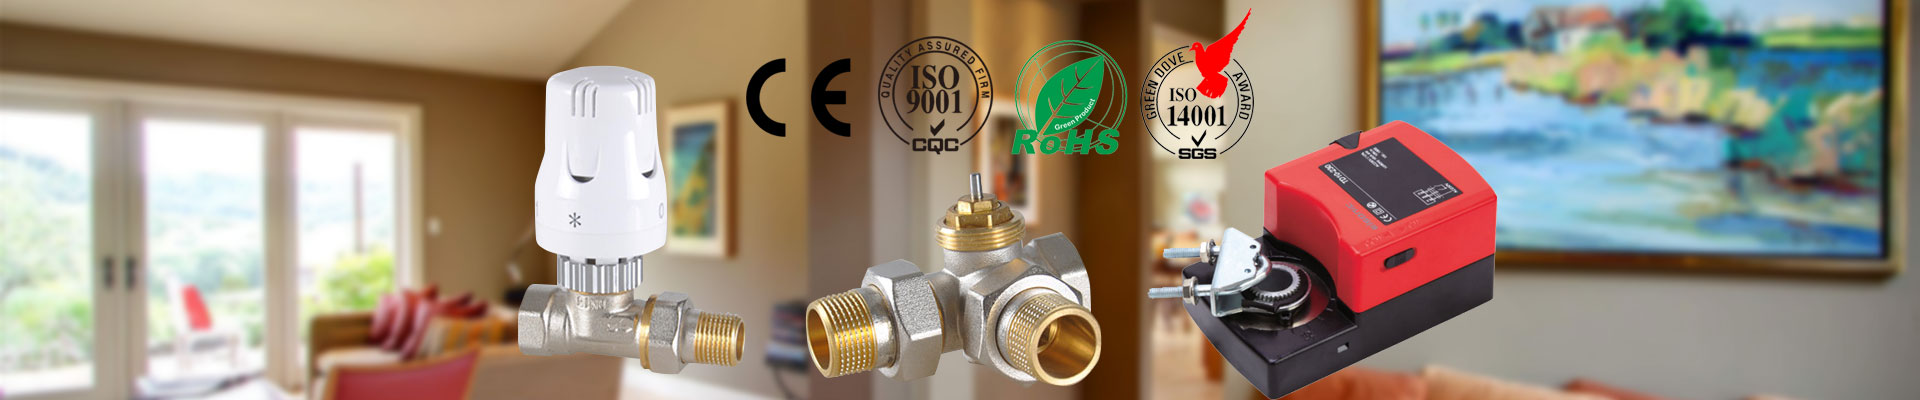 DQF-B Motorized Ball valve for FCU system